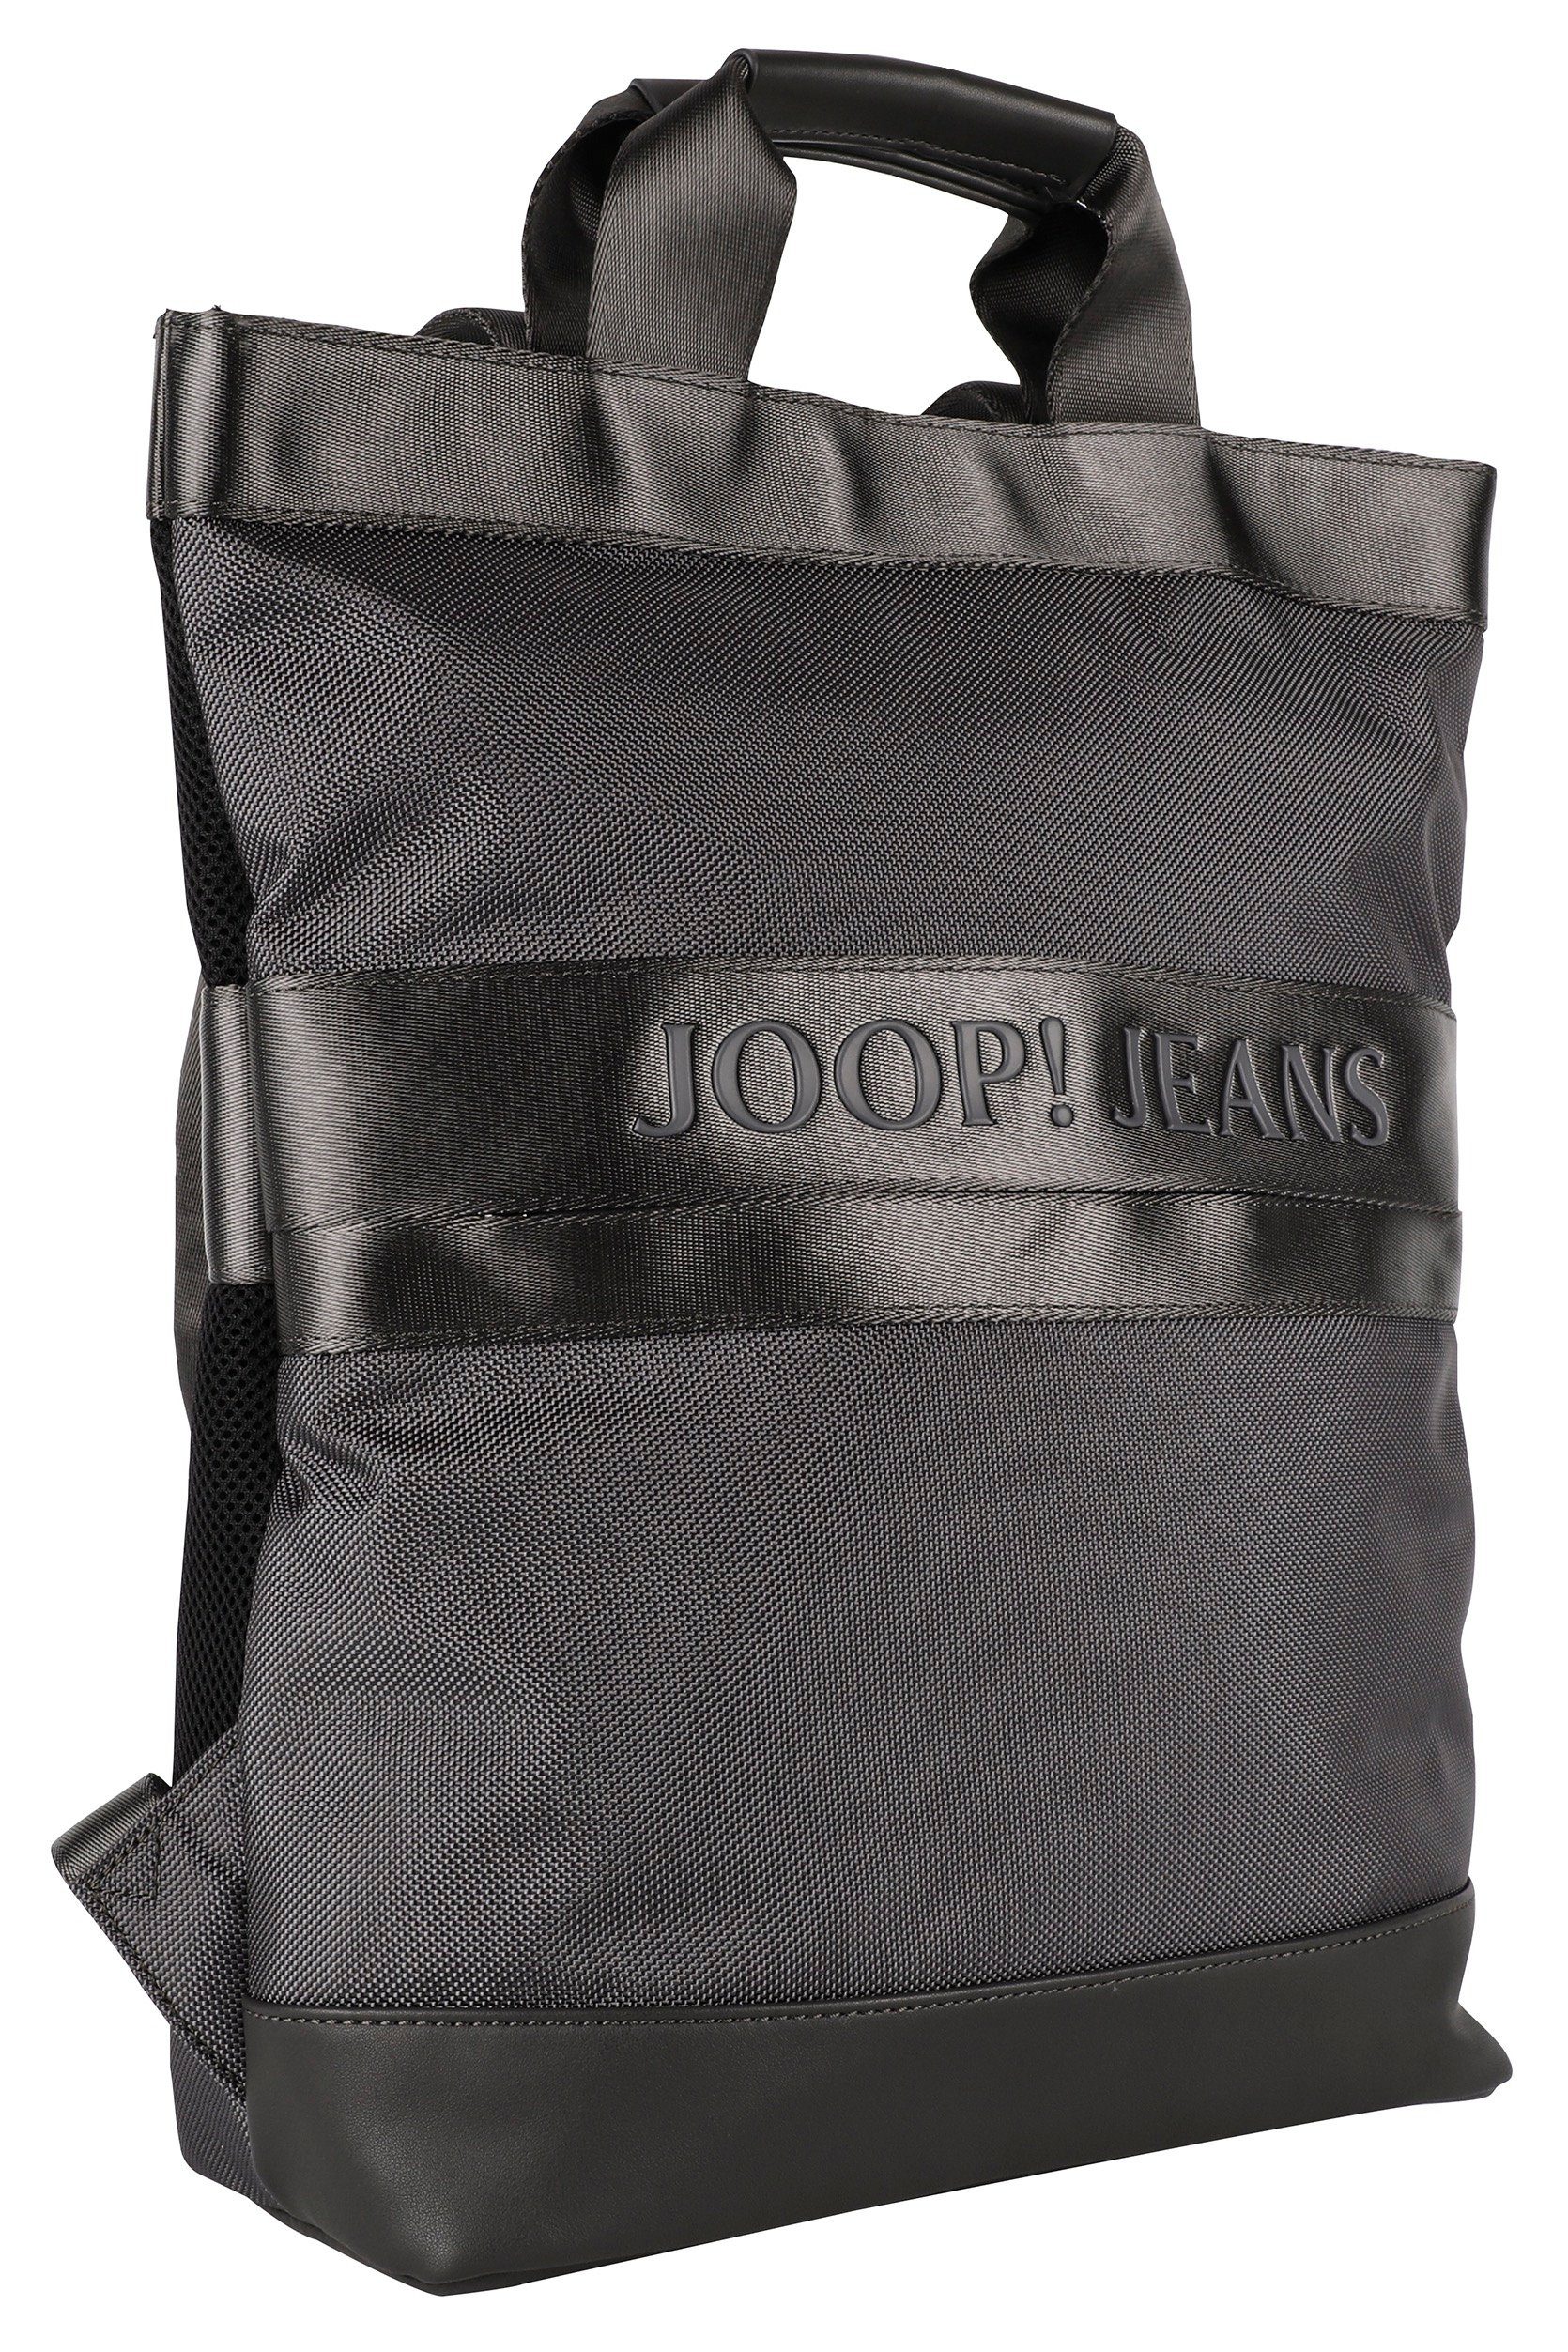 svz, Jeans Cityrucksack falk Reißverschluss-Vortasche Joop mit modica backpack dunkelgrau